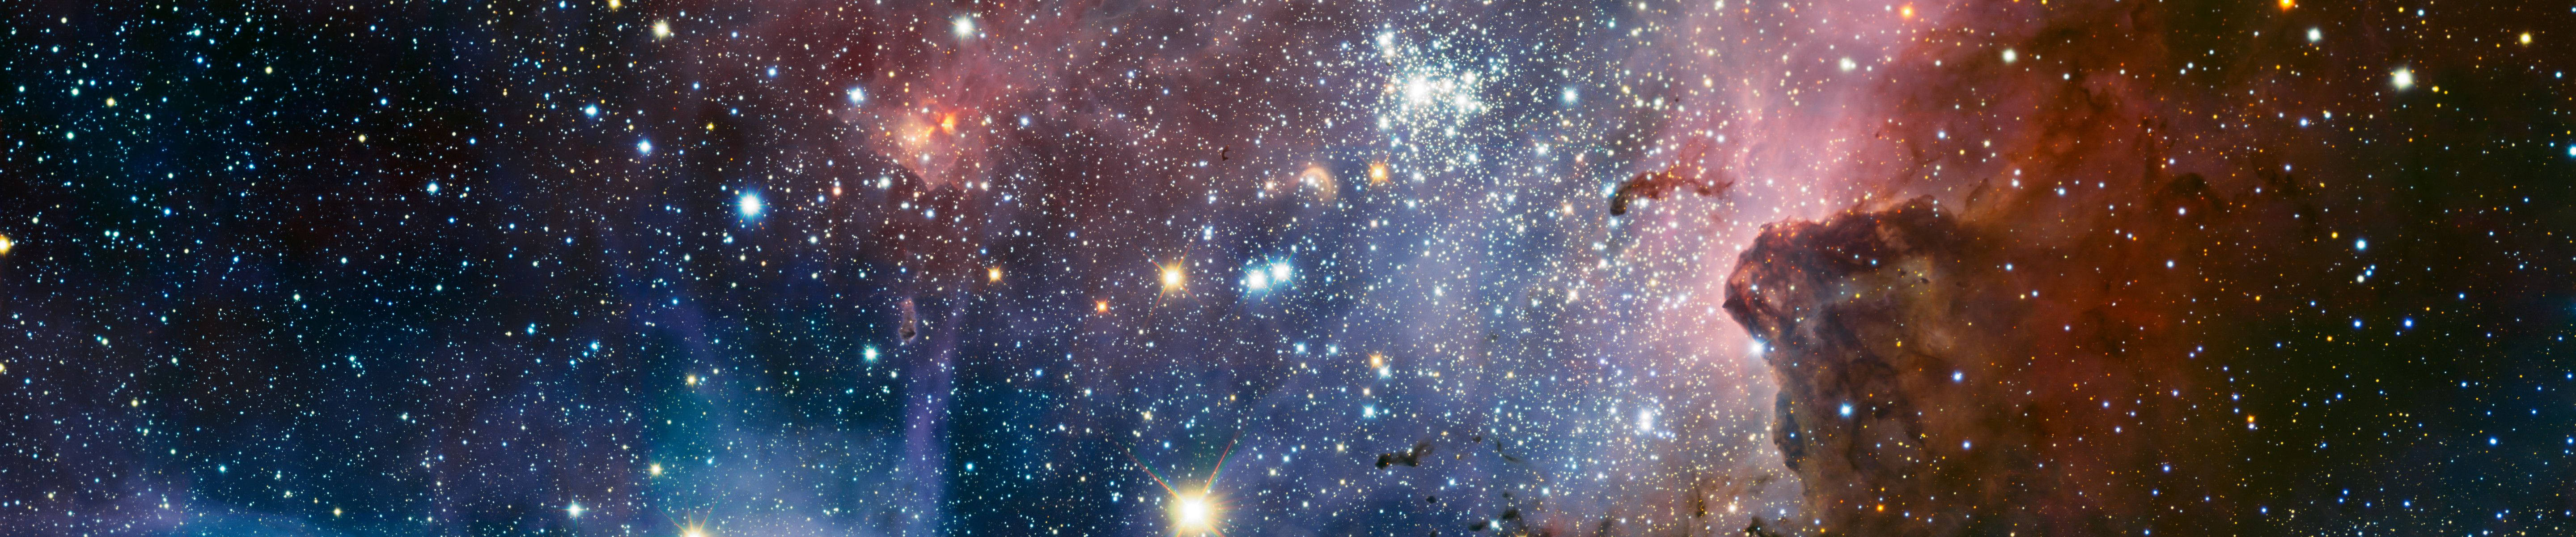 Stunning Starry Galaxy Three Screen Wallpaper